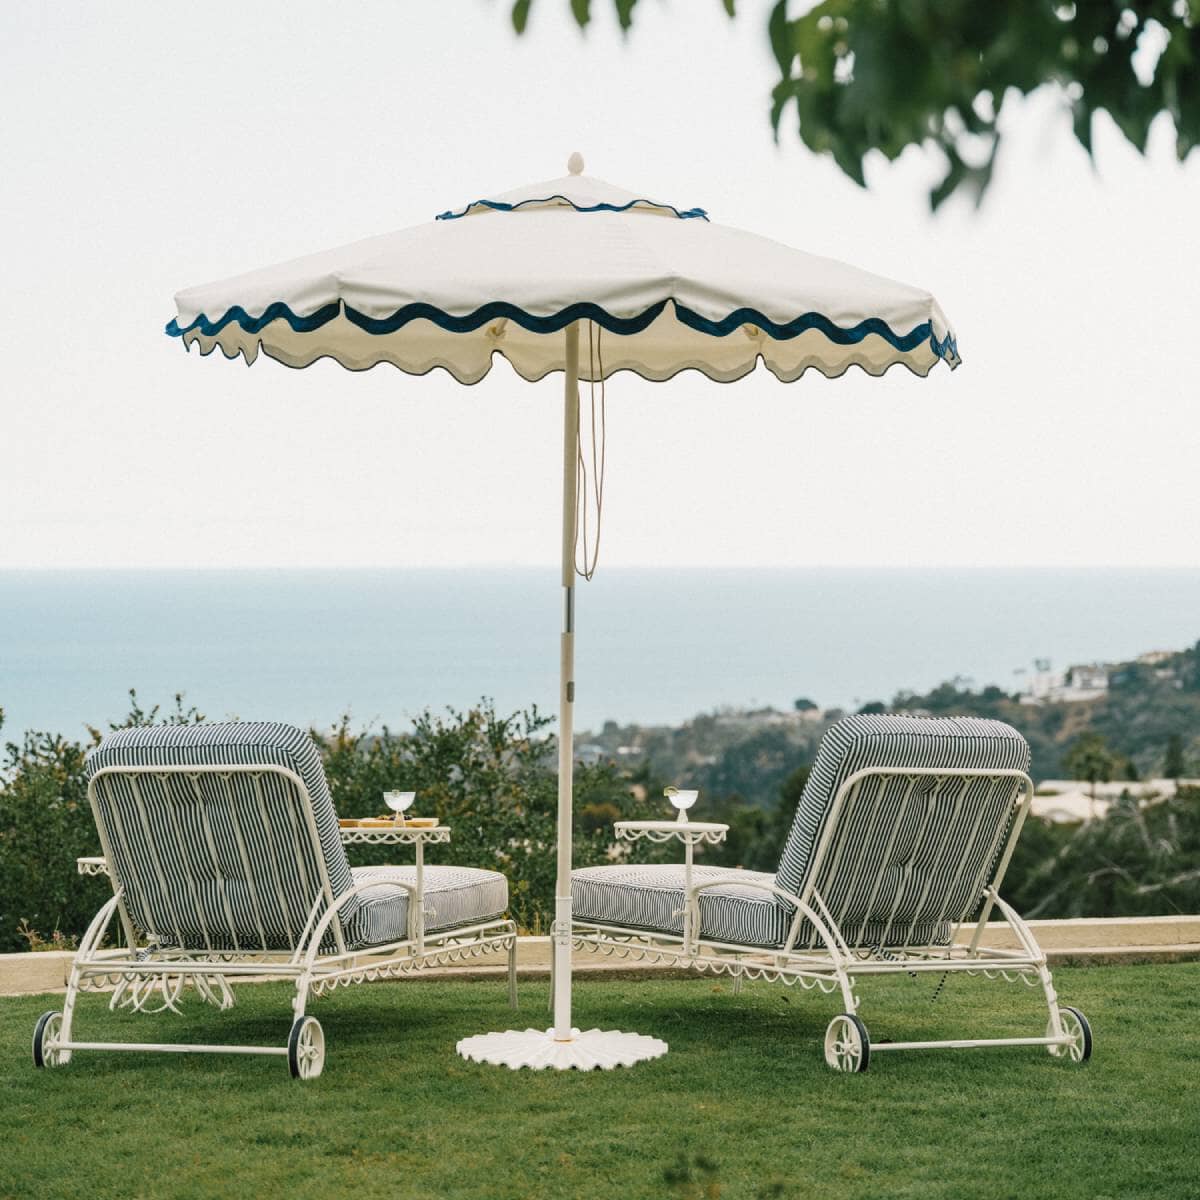 The Al Fresco Sun Lounger Cushion - Lauren's Navy Stripe Al Fresco Sun Lounger Cushion Business & Pleasure Co Aus 